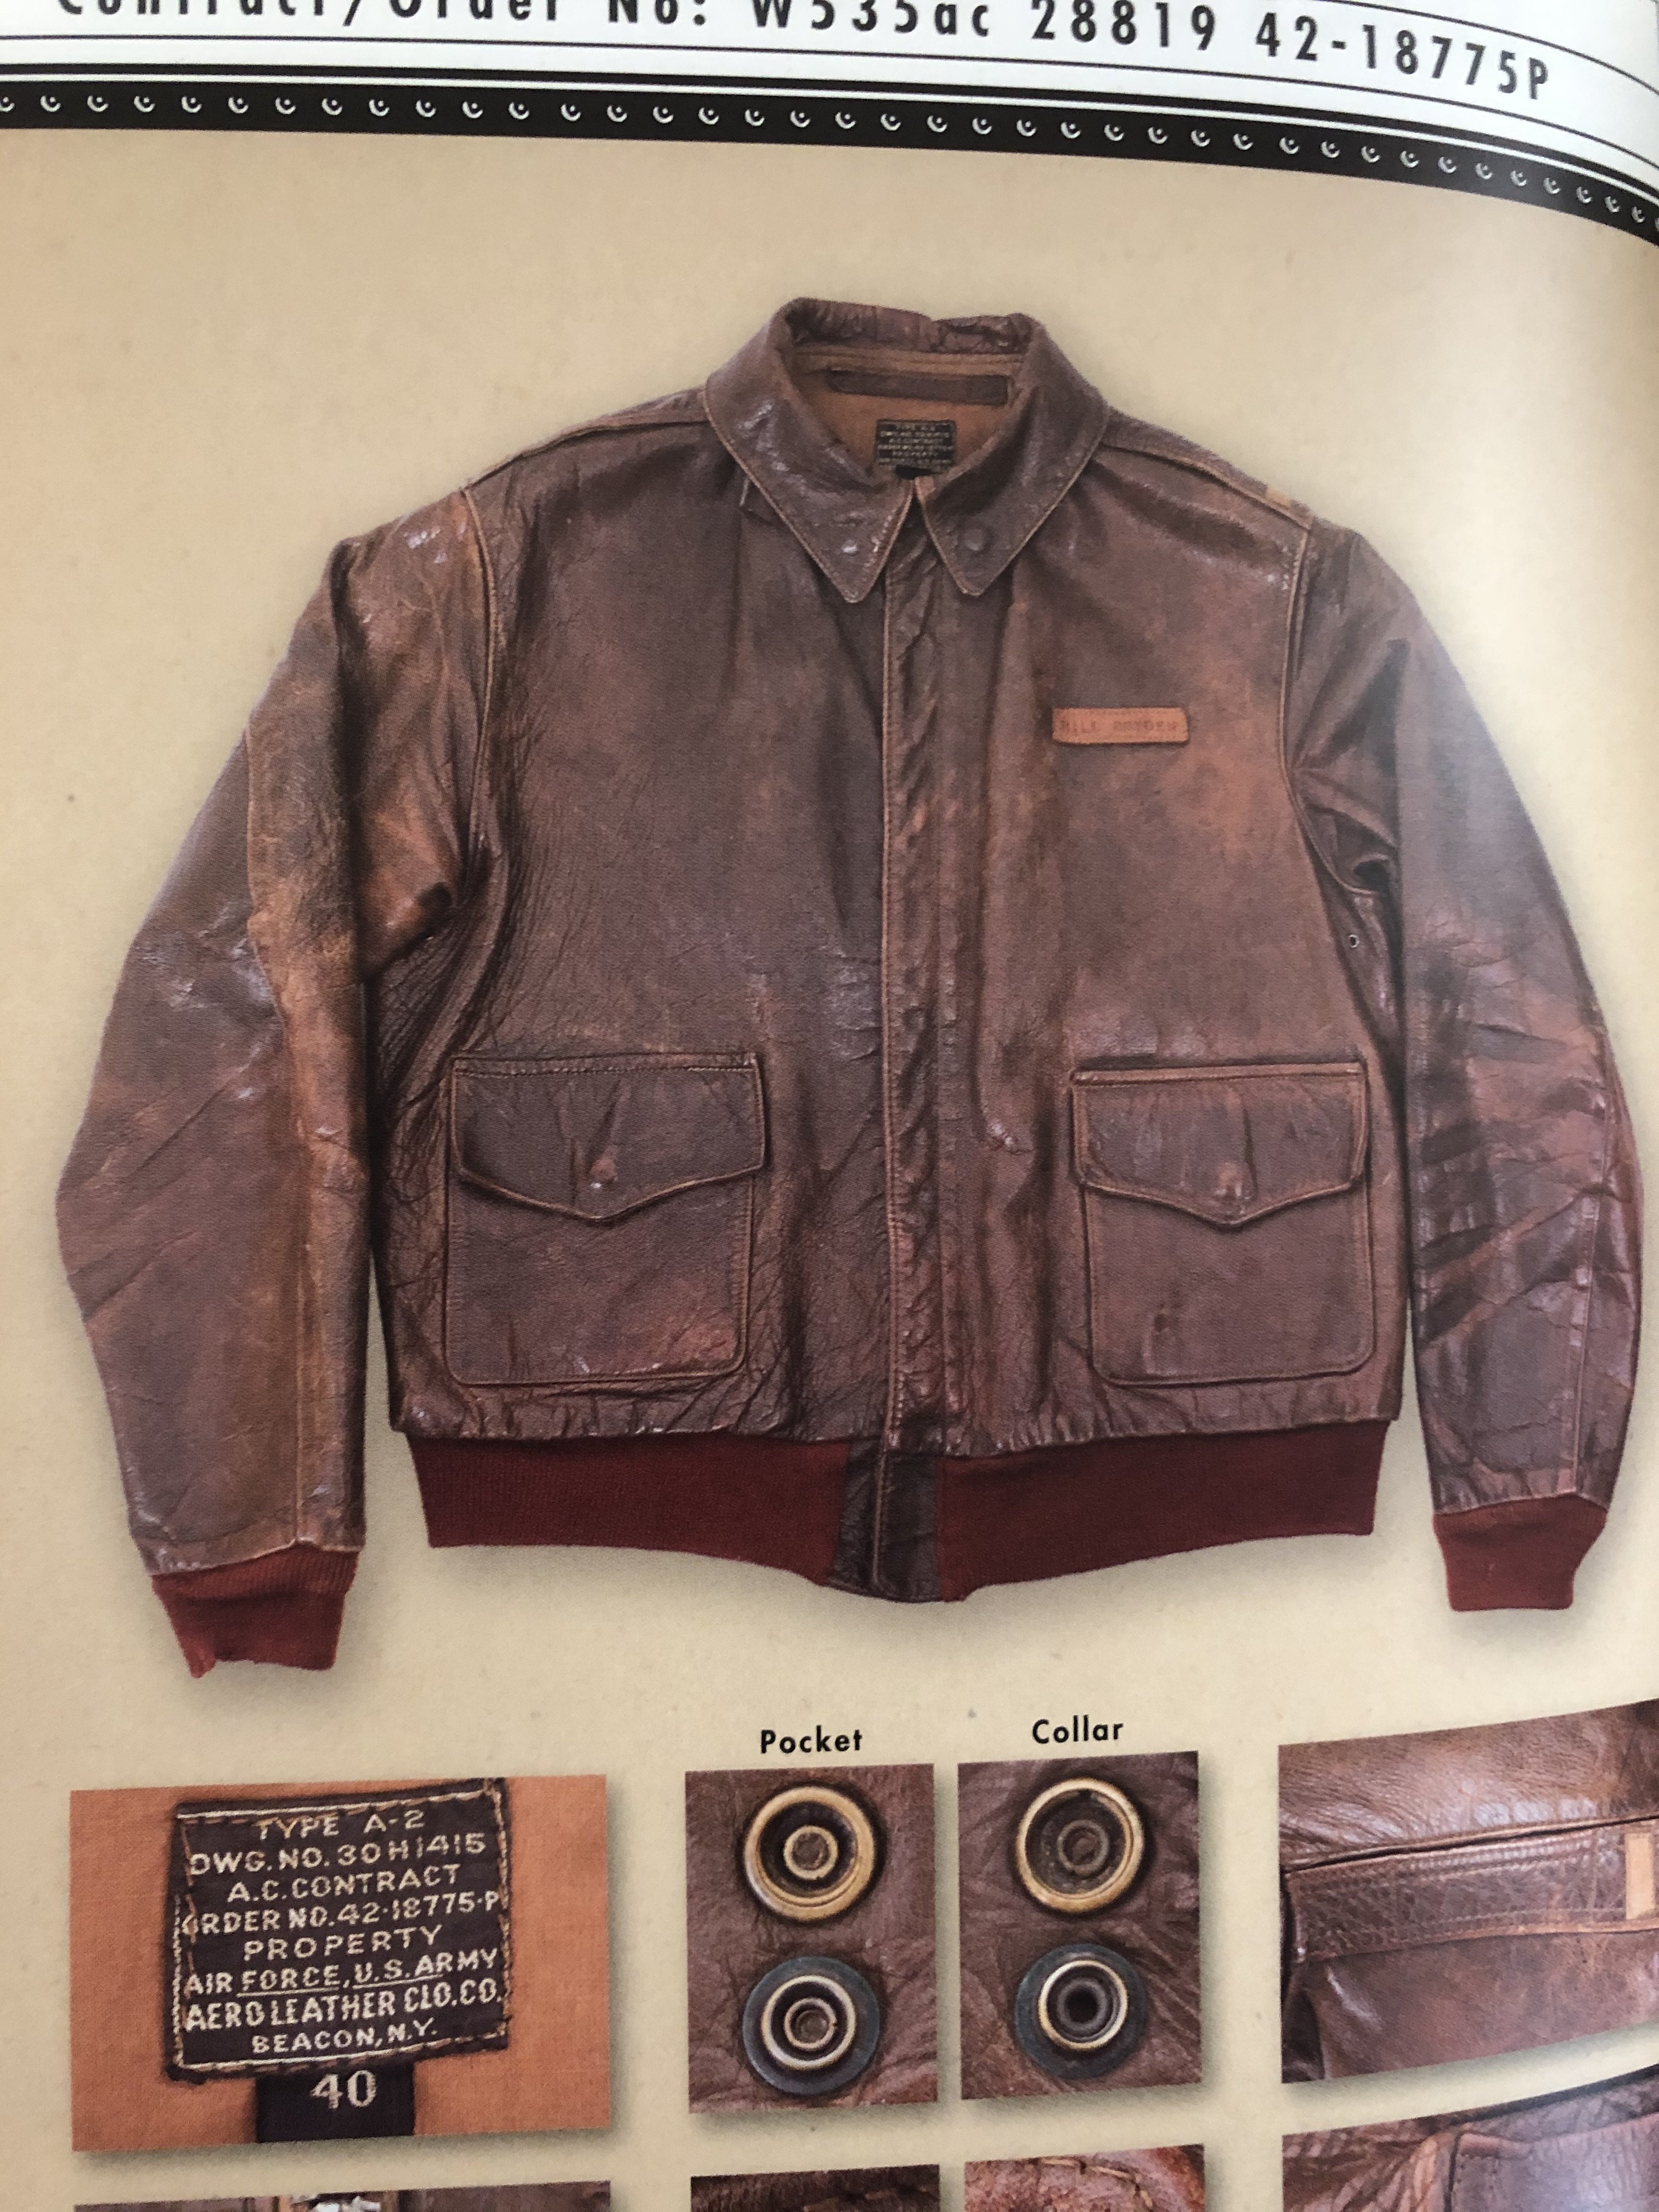 Aero USAAF W535ac-16160 Type A-2 | Vintage Leather Jackets Forum